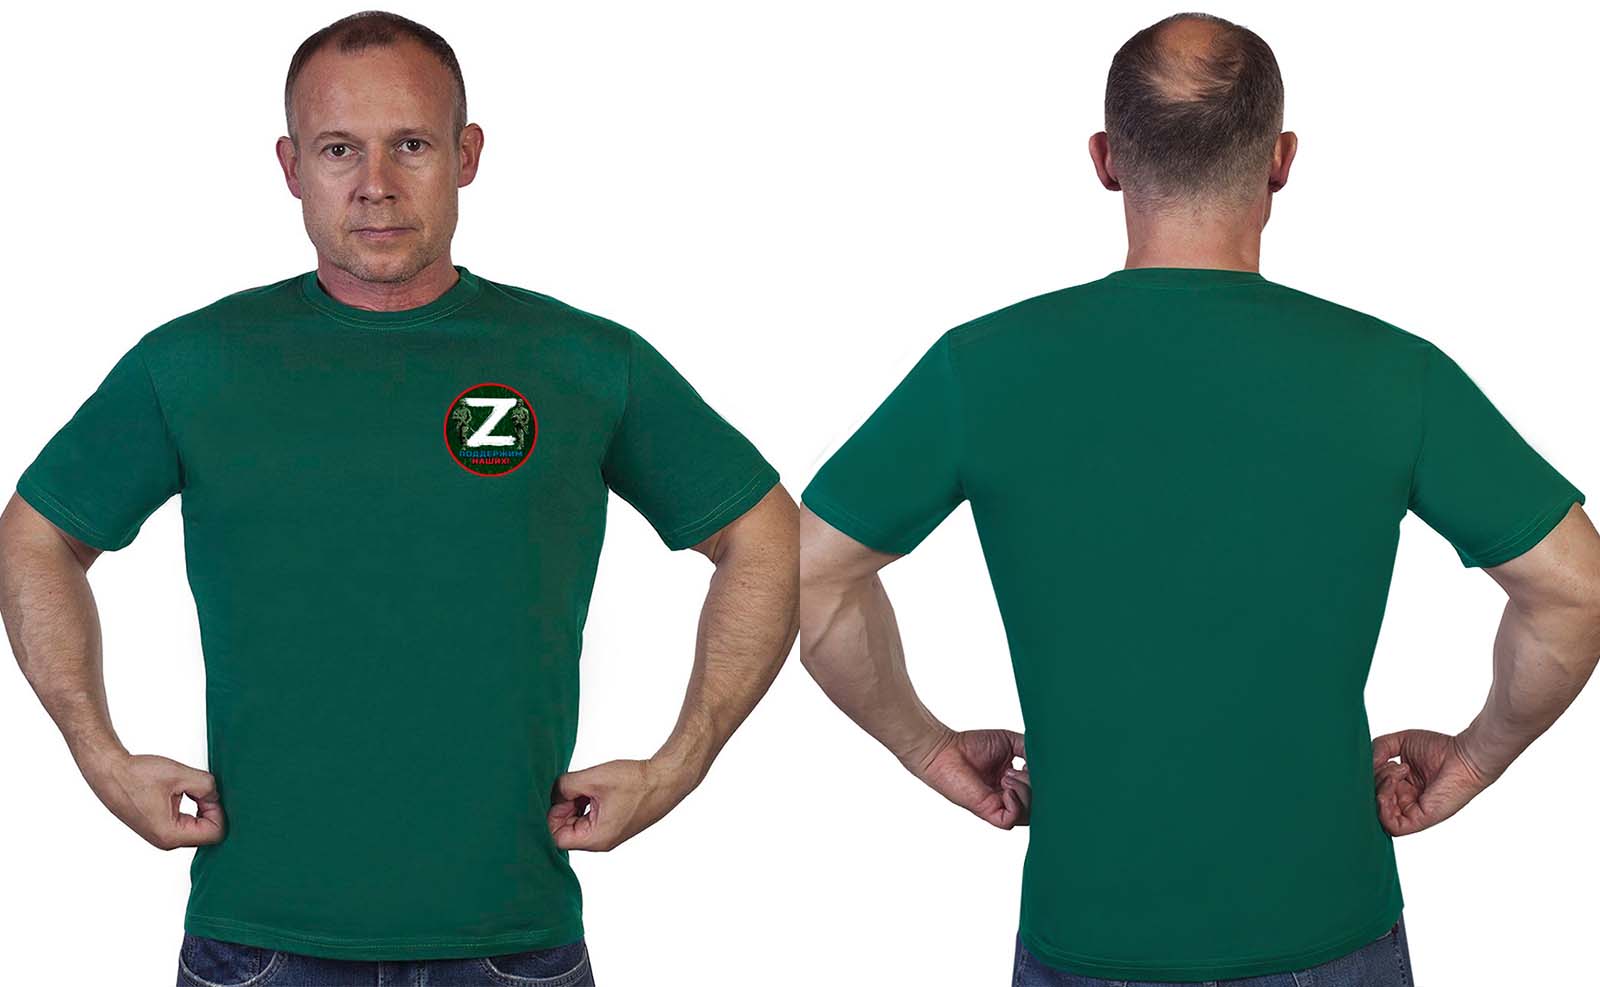 Зеленая футболка с термотрансфером "Z"